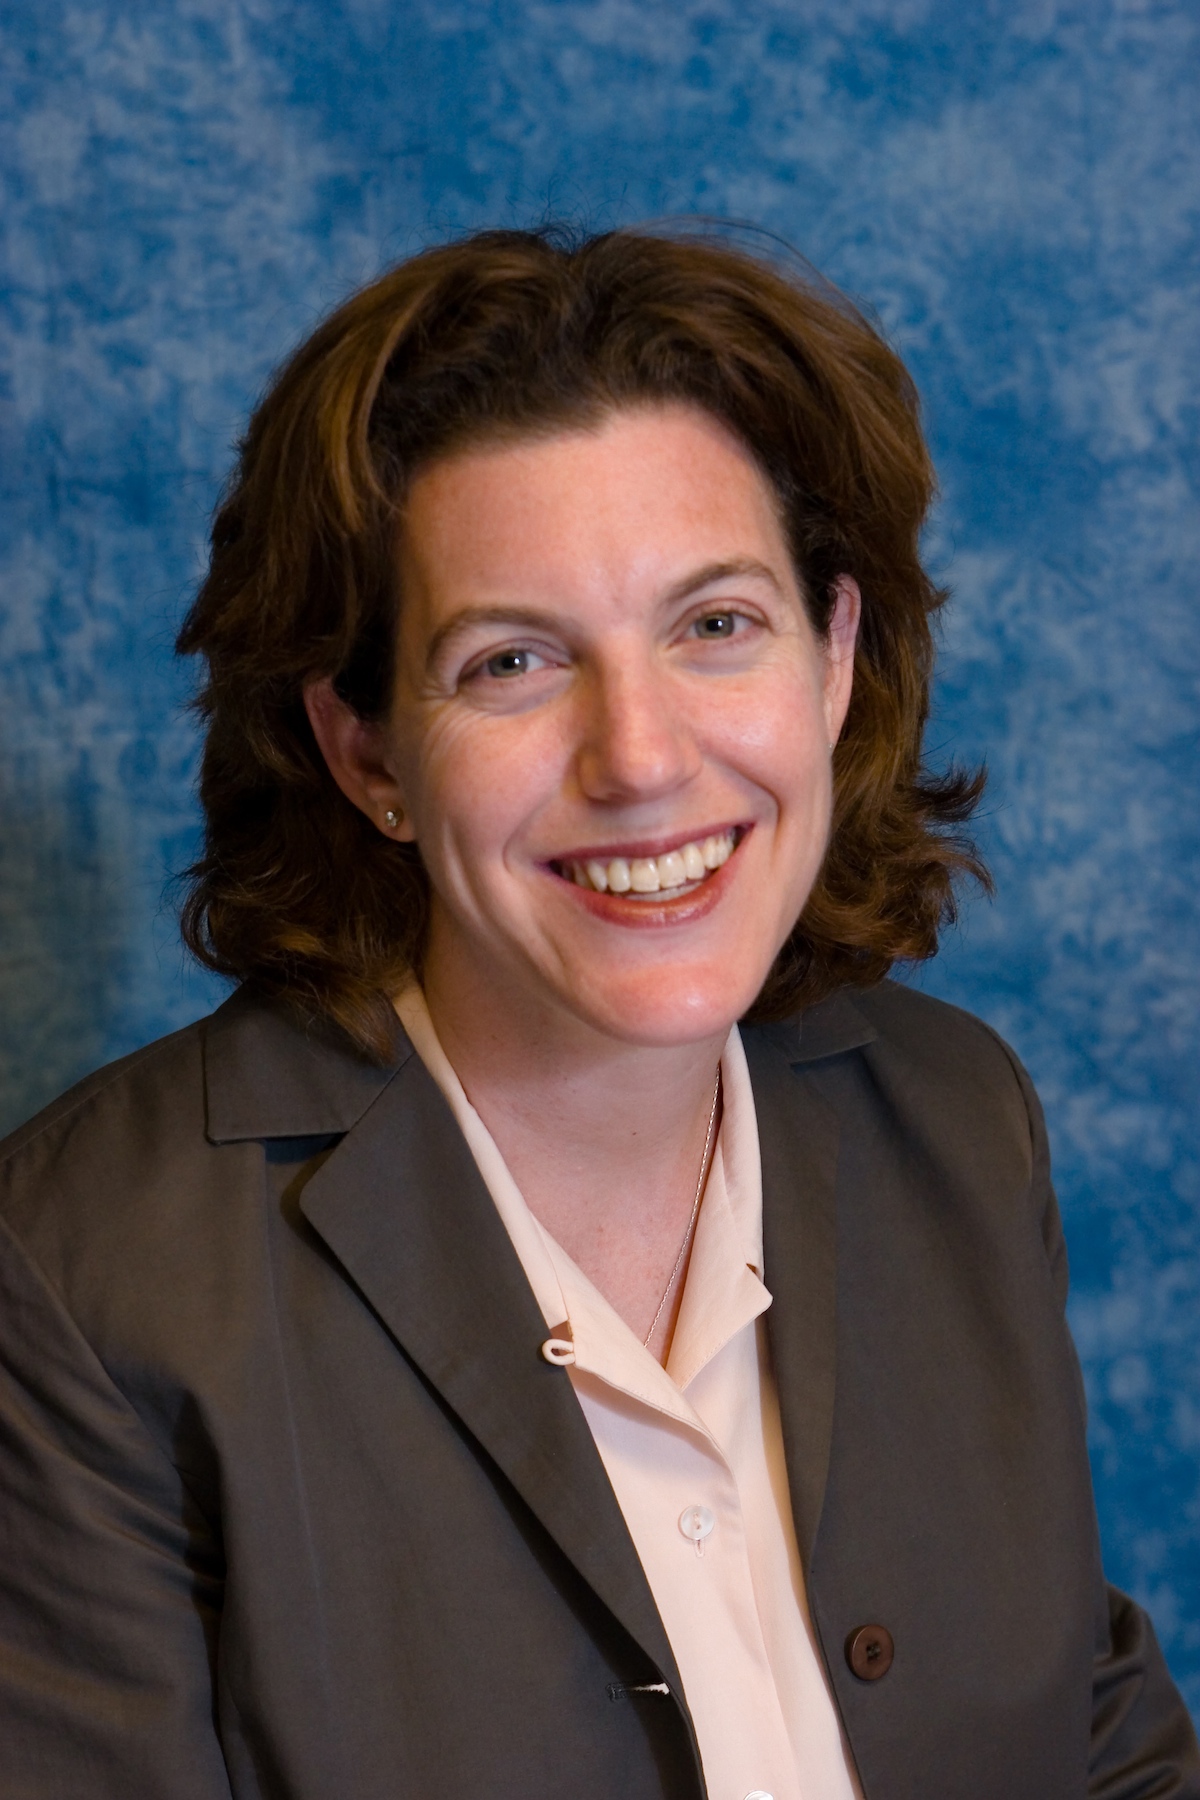 Elder law attorney Sara E. Meyers, partner at Enea, Scanlan & Sirignano, LLP